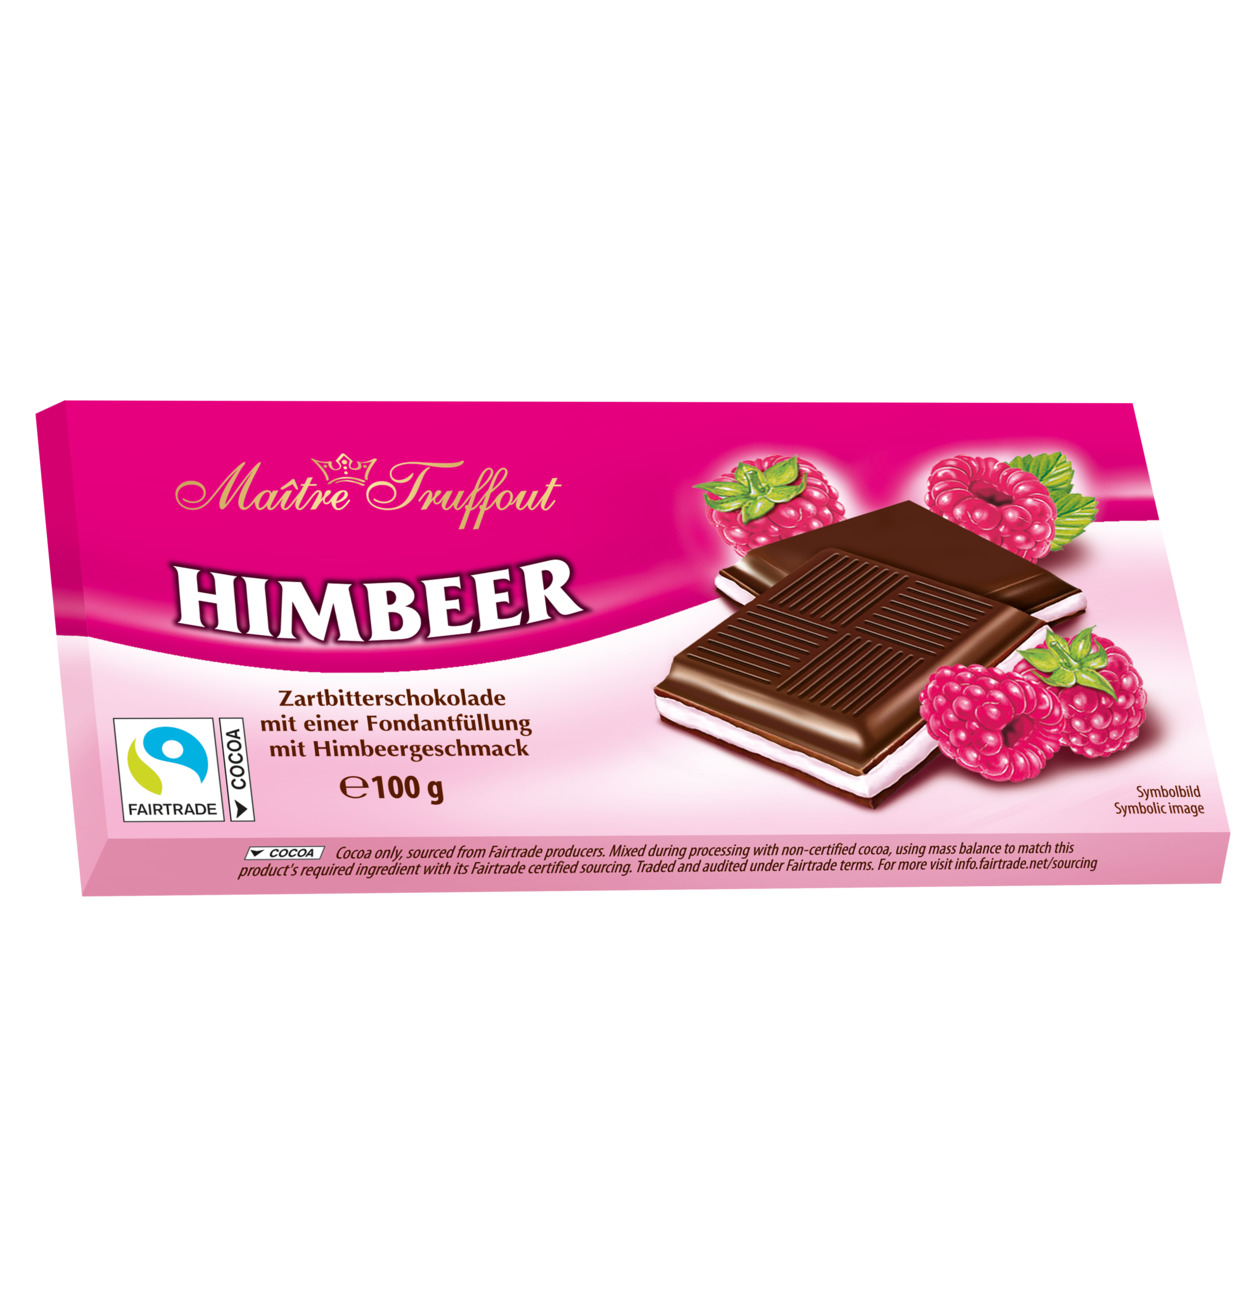 MÂITRE TRUFFOUT Himbeer Zartbitterschokolade 100g | Ness Mein Einkaufsmarkt  - Onlineshop